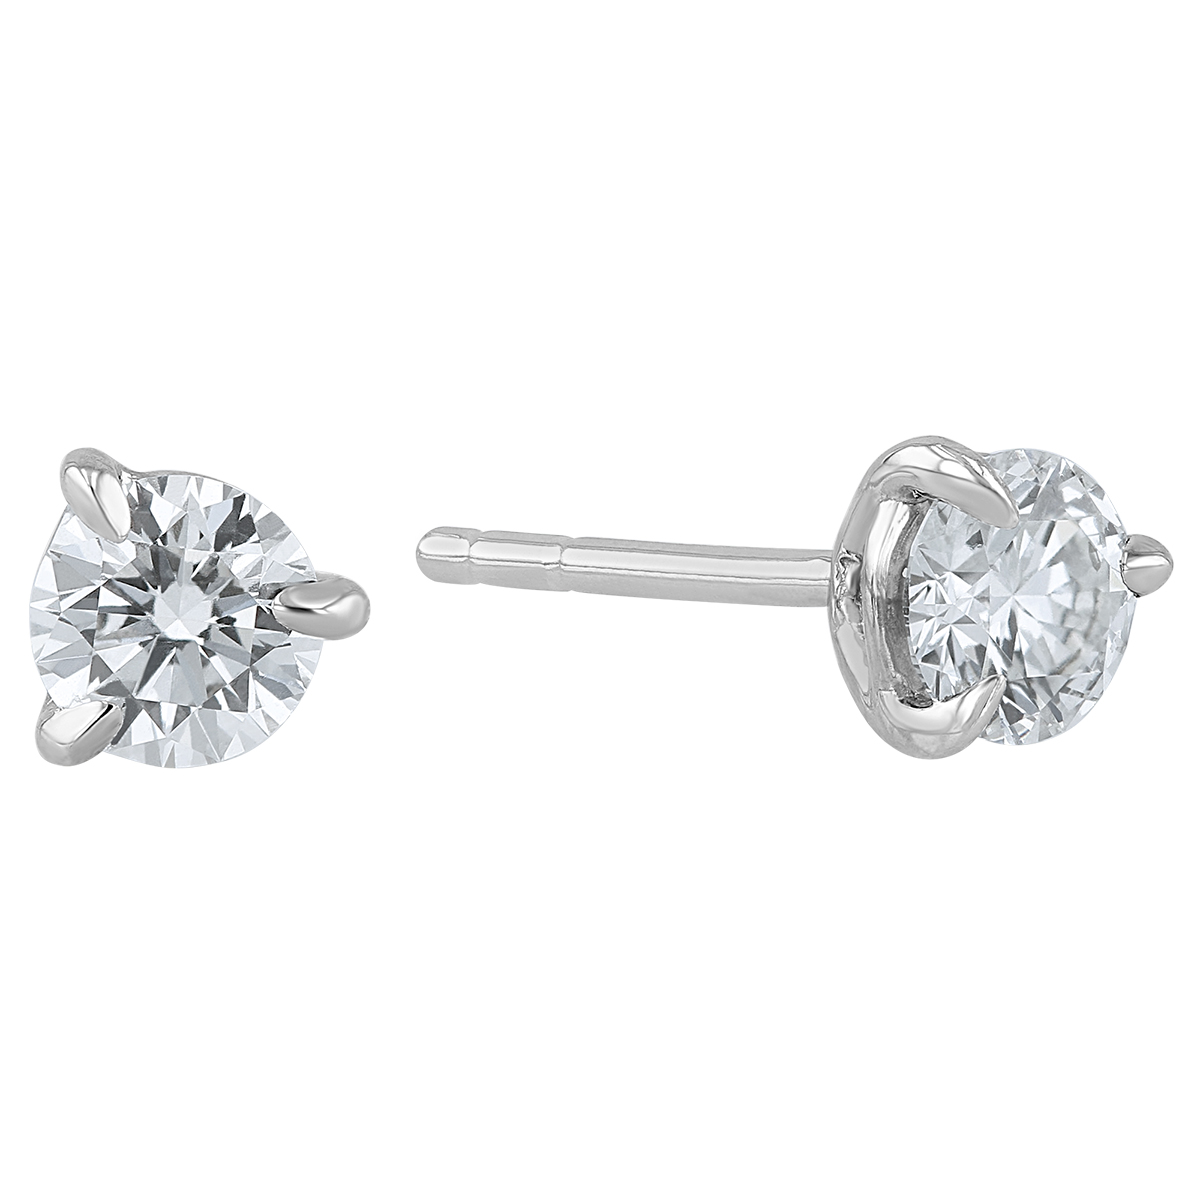 Round diamond earring jackets | Shop Earrings | Lugaro